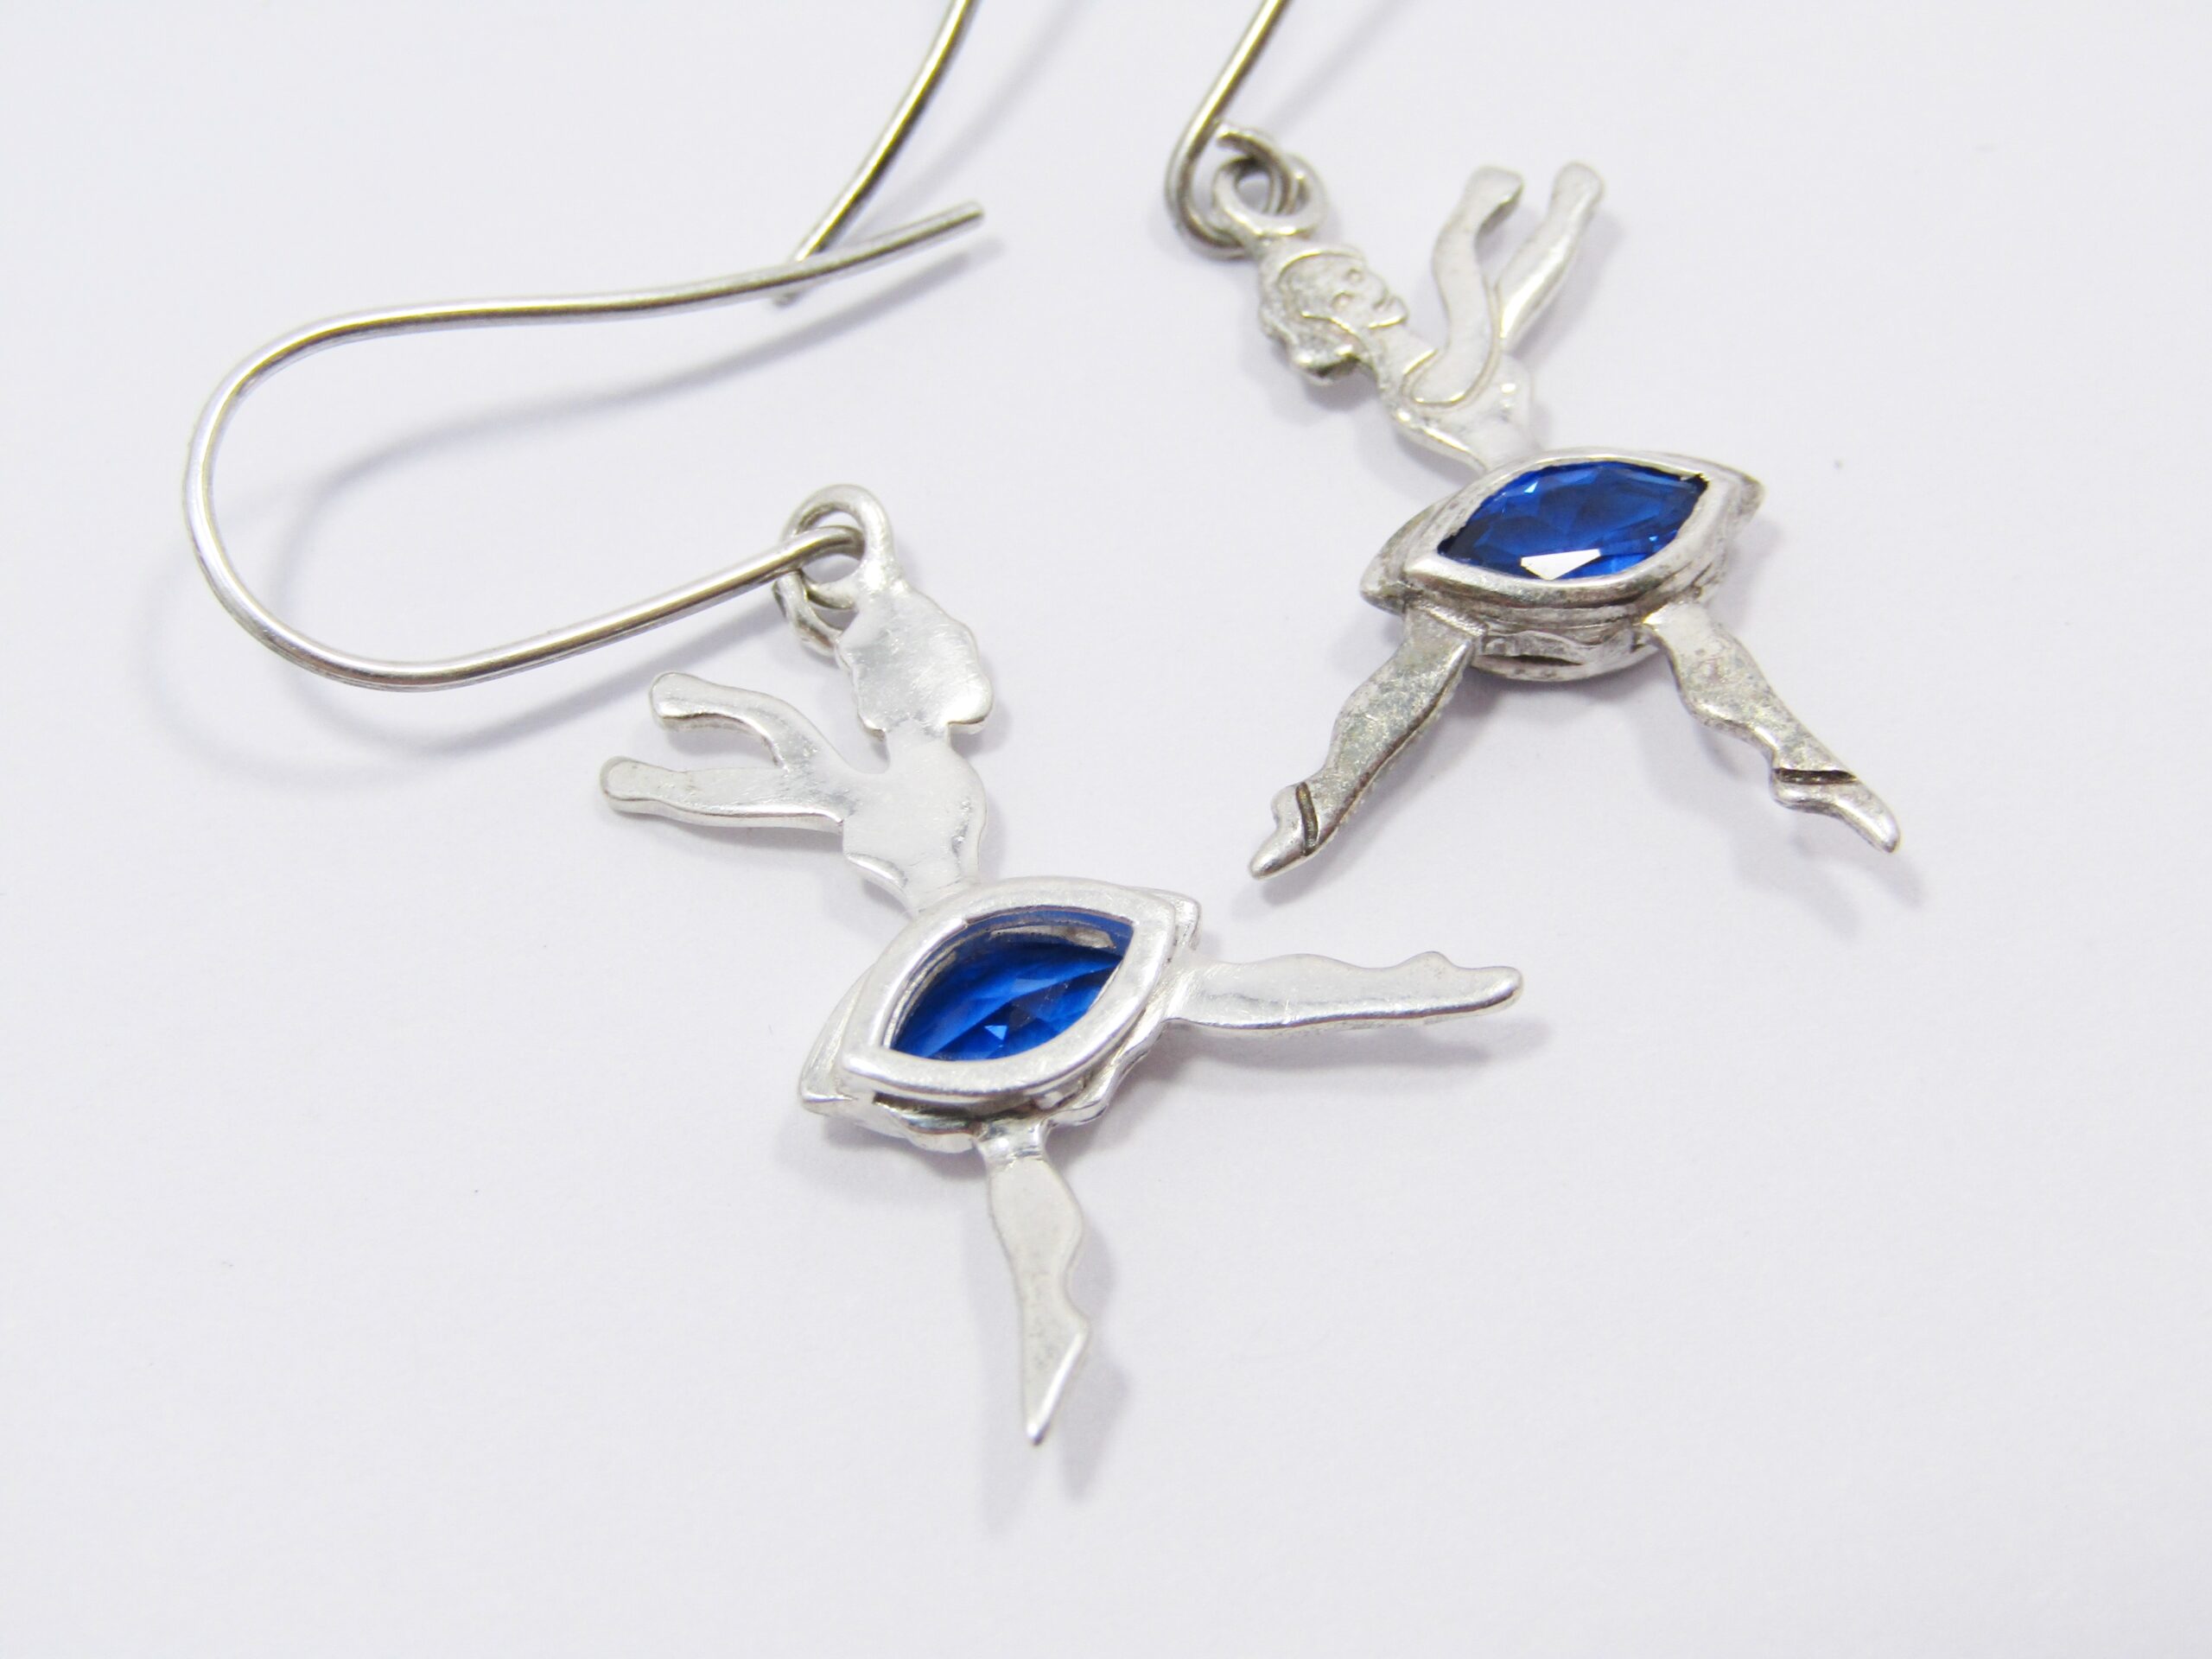 A Lovely Pair of Blue Zirconia Ballerina Earrings in Sterling Silver